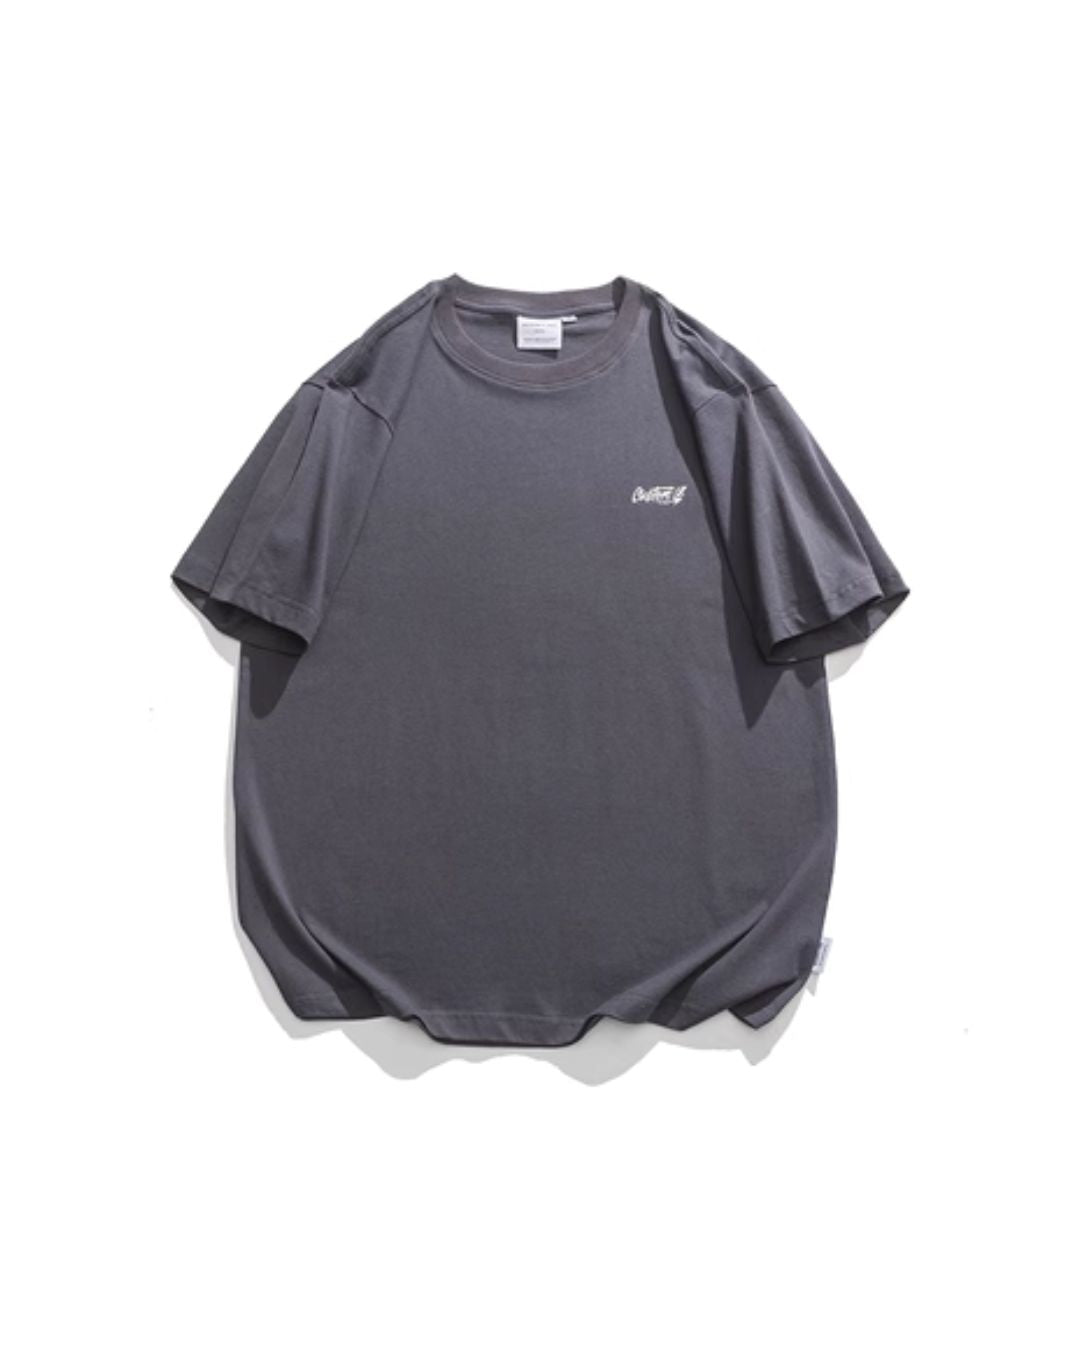 essentials black logo Tシャツ 20SS Sサイズ